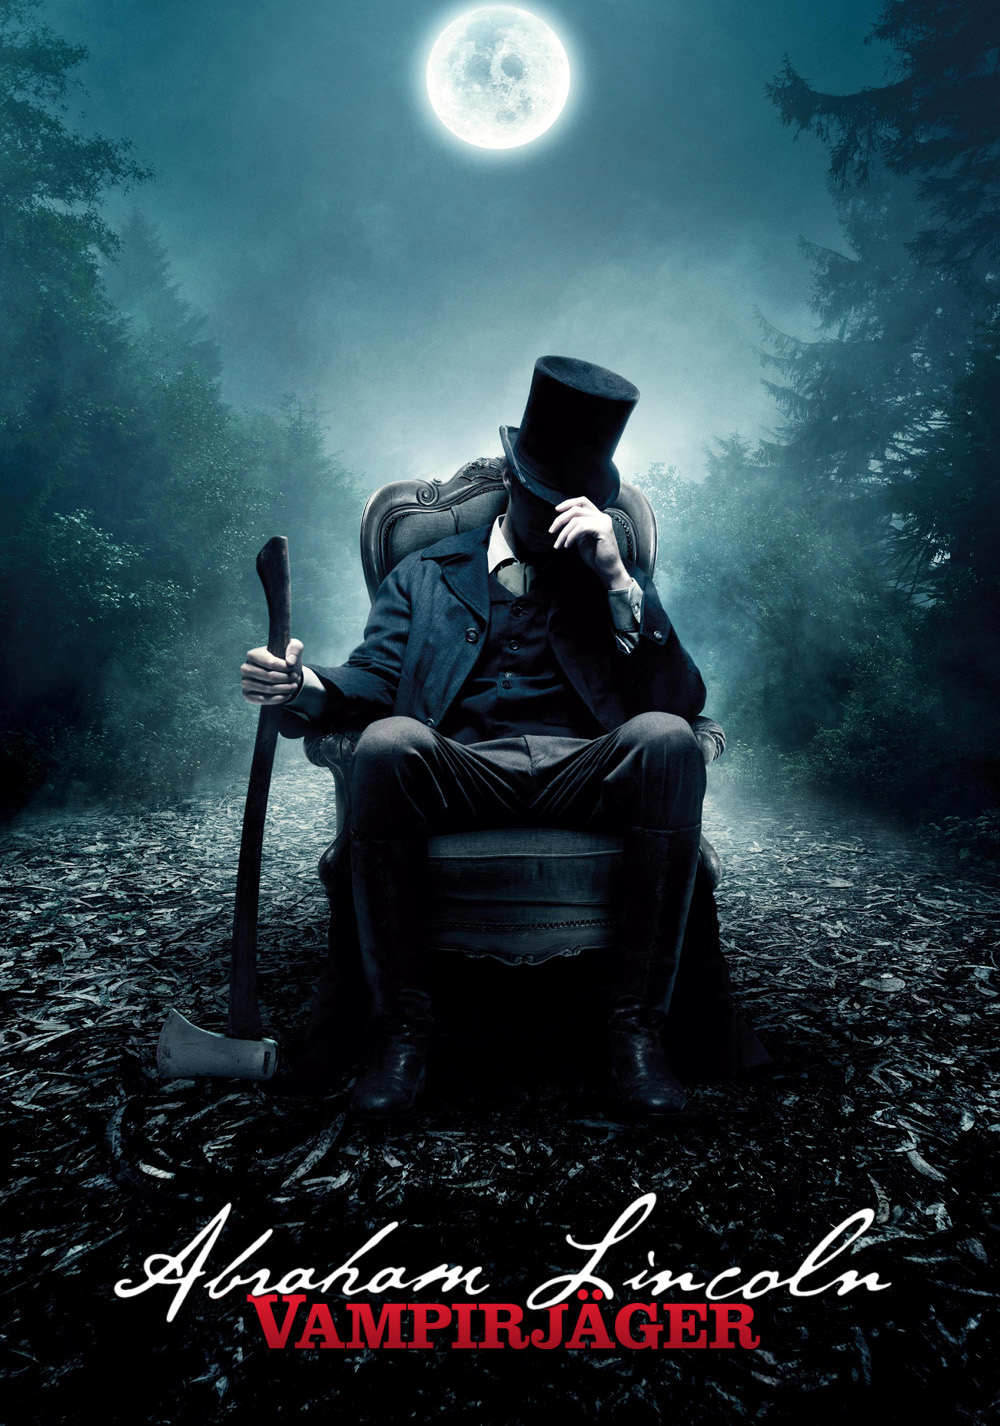 Abraham Lincoln: Vampire Hunter Art